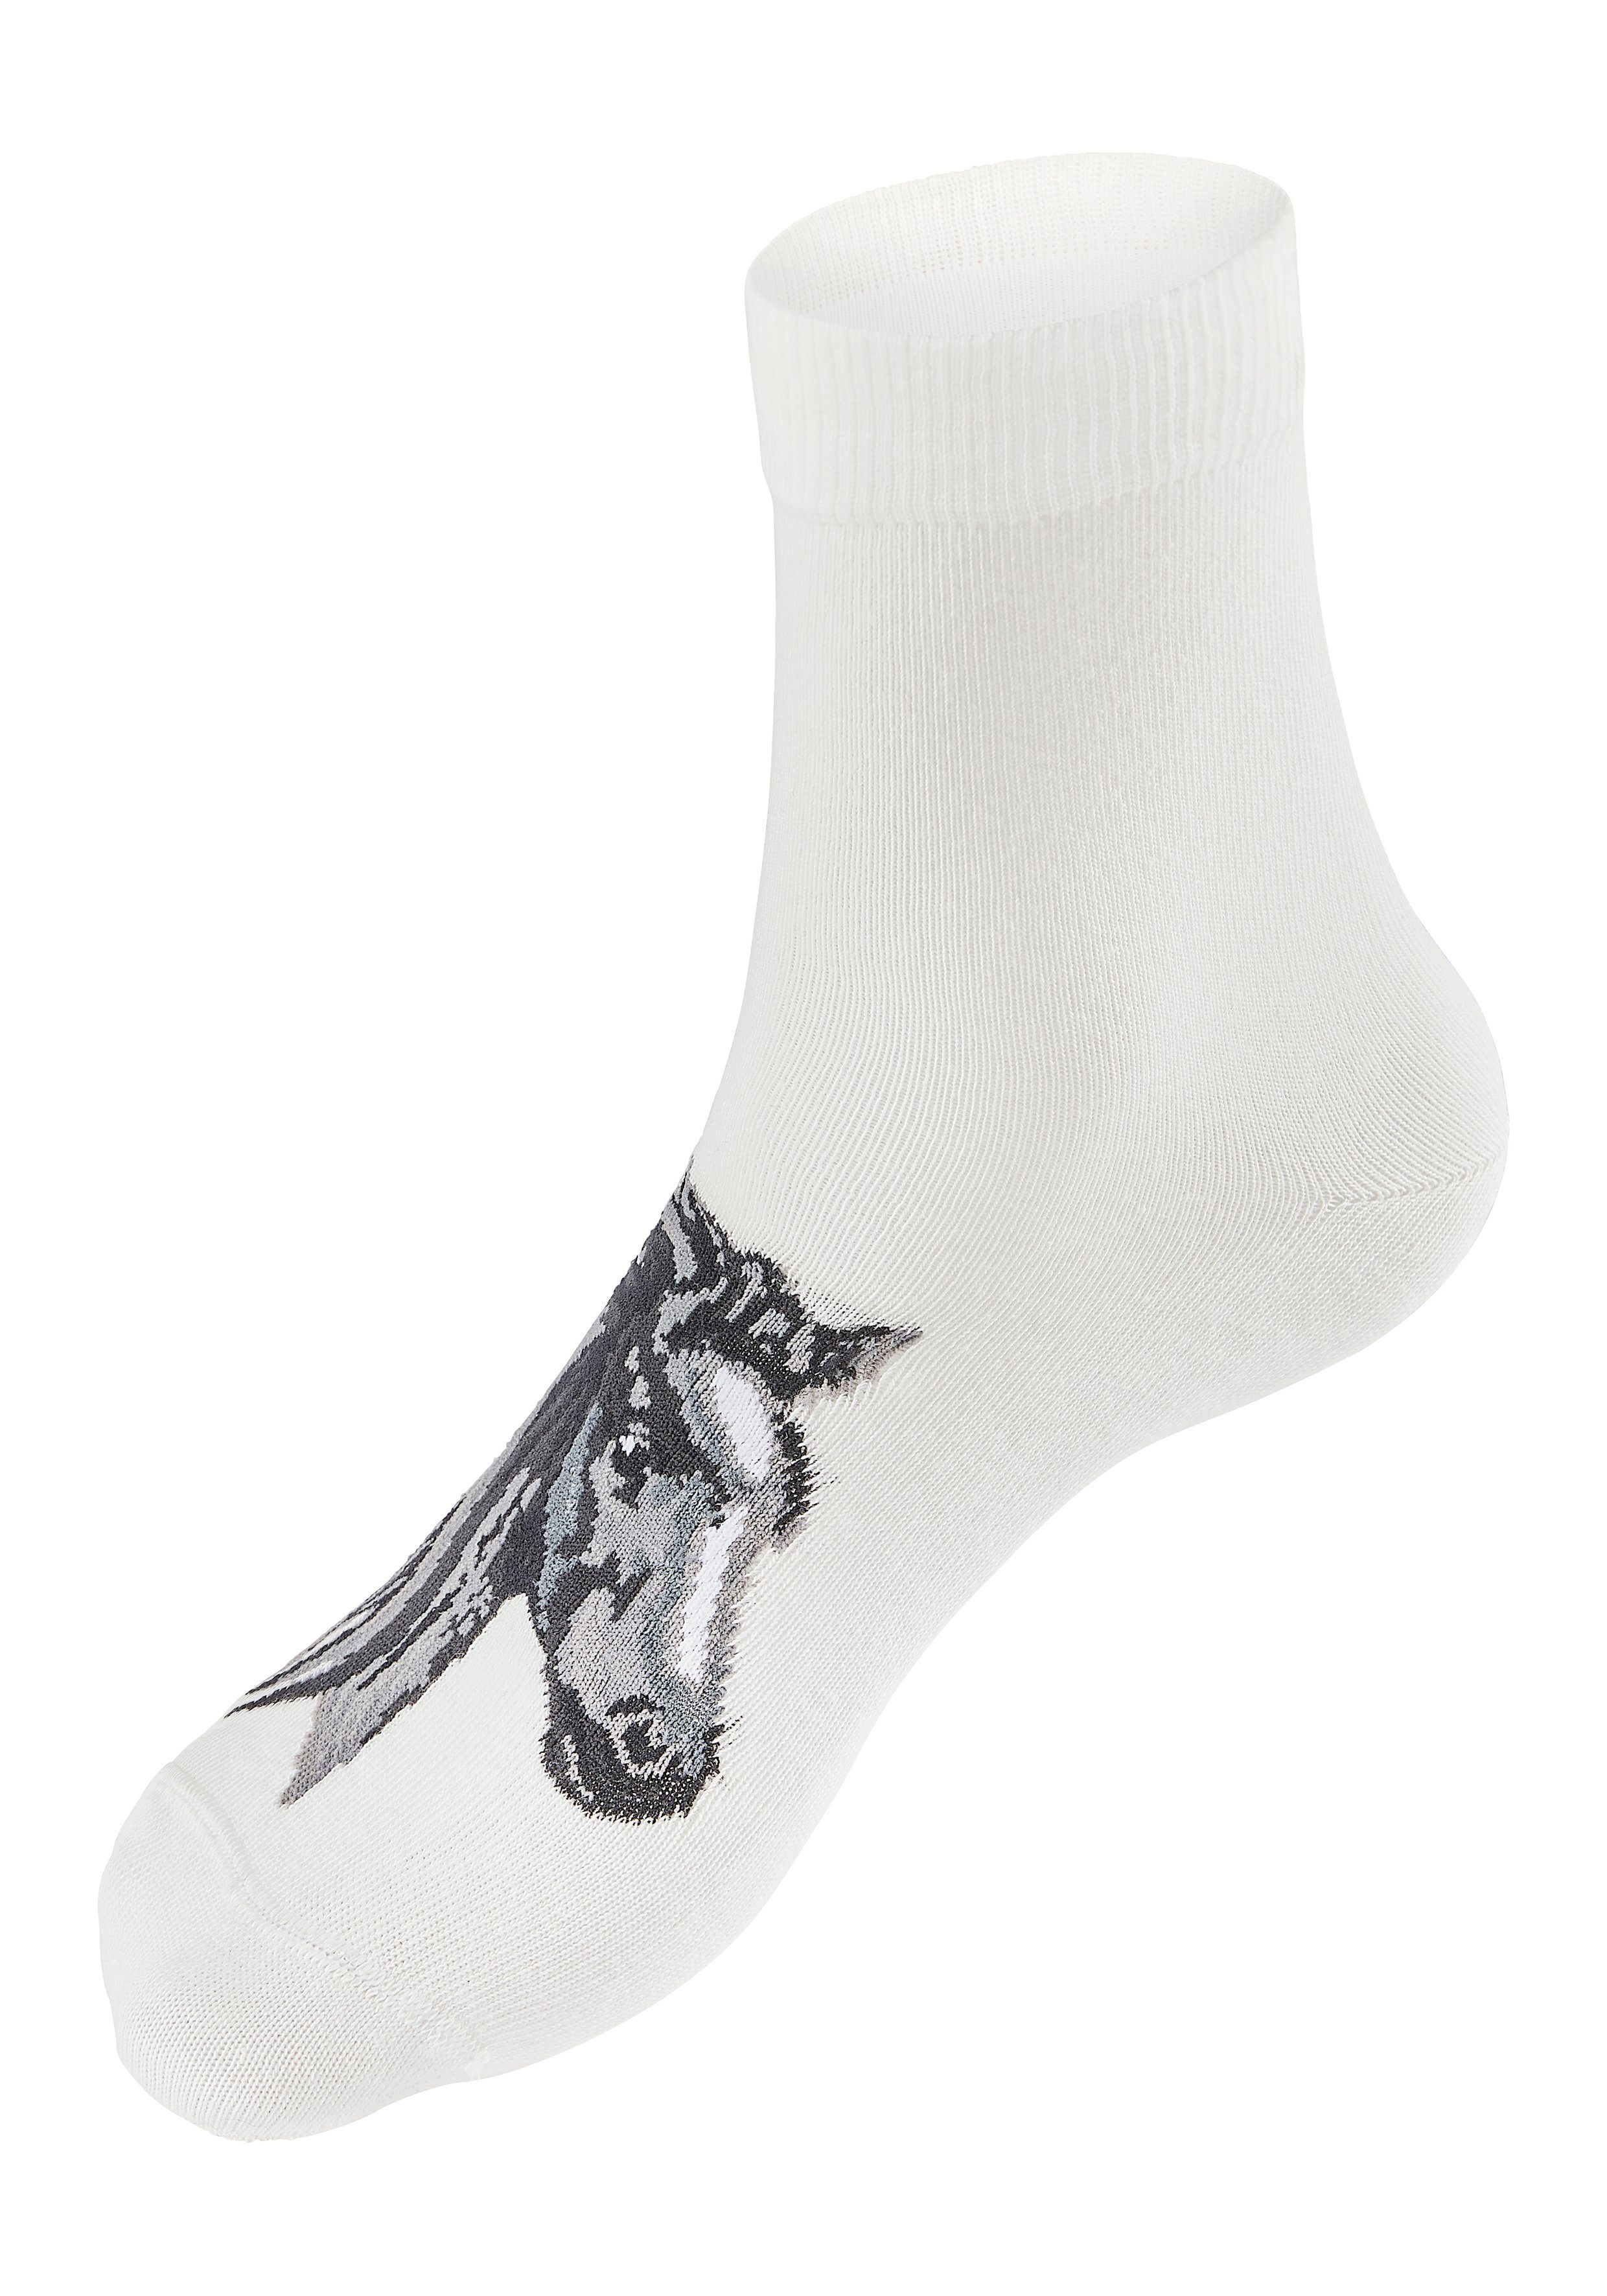 H.I.S Socken (5-Paar) mit Pferdemotiven verschiedenen